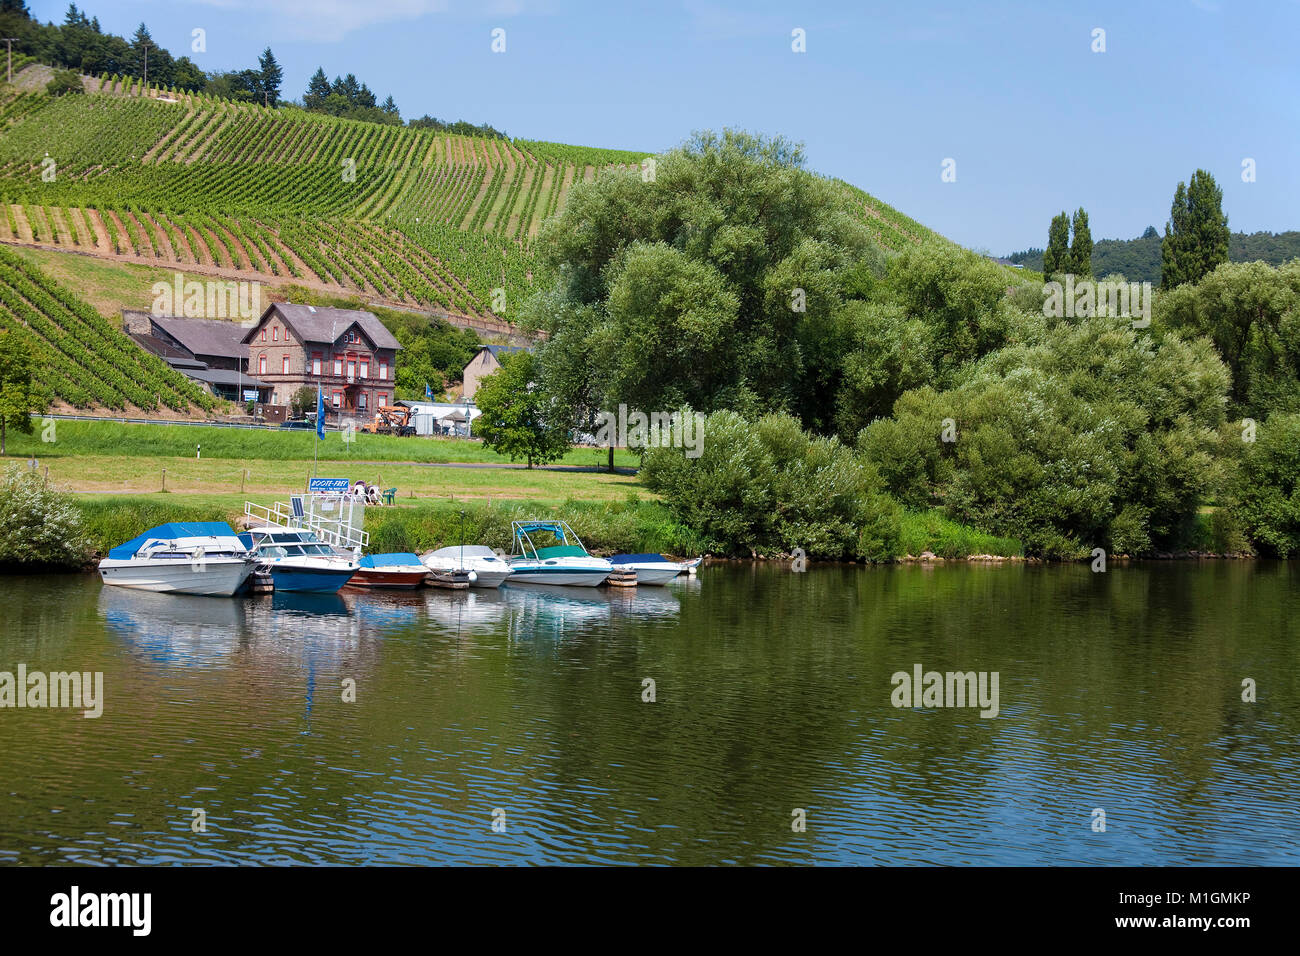 Boat rental, motor boats at landing stage, Lieser, Moselle river, Rhineland-Palatinate, Germany, Europe Stock Photo